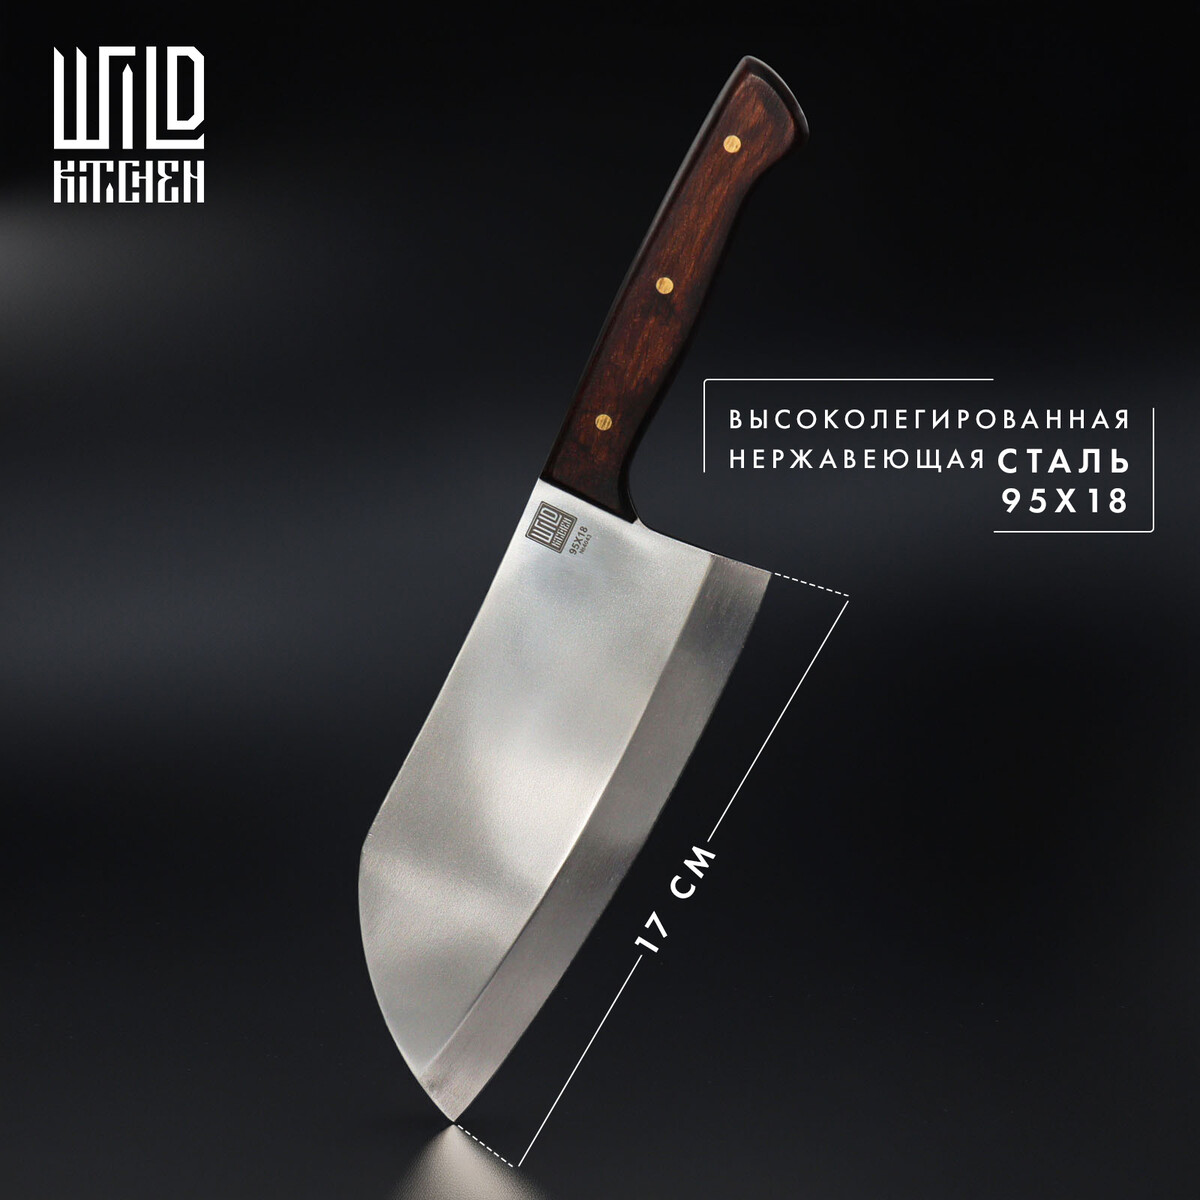 Нож - топорик средний wild kitchen, сталь 95×18, лезвие 17 см нож топорик большой wild kitchen сталь 95×18 лезвие 19 5 см